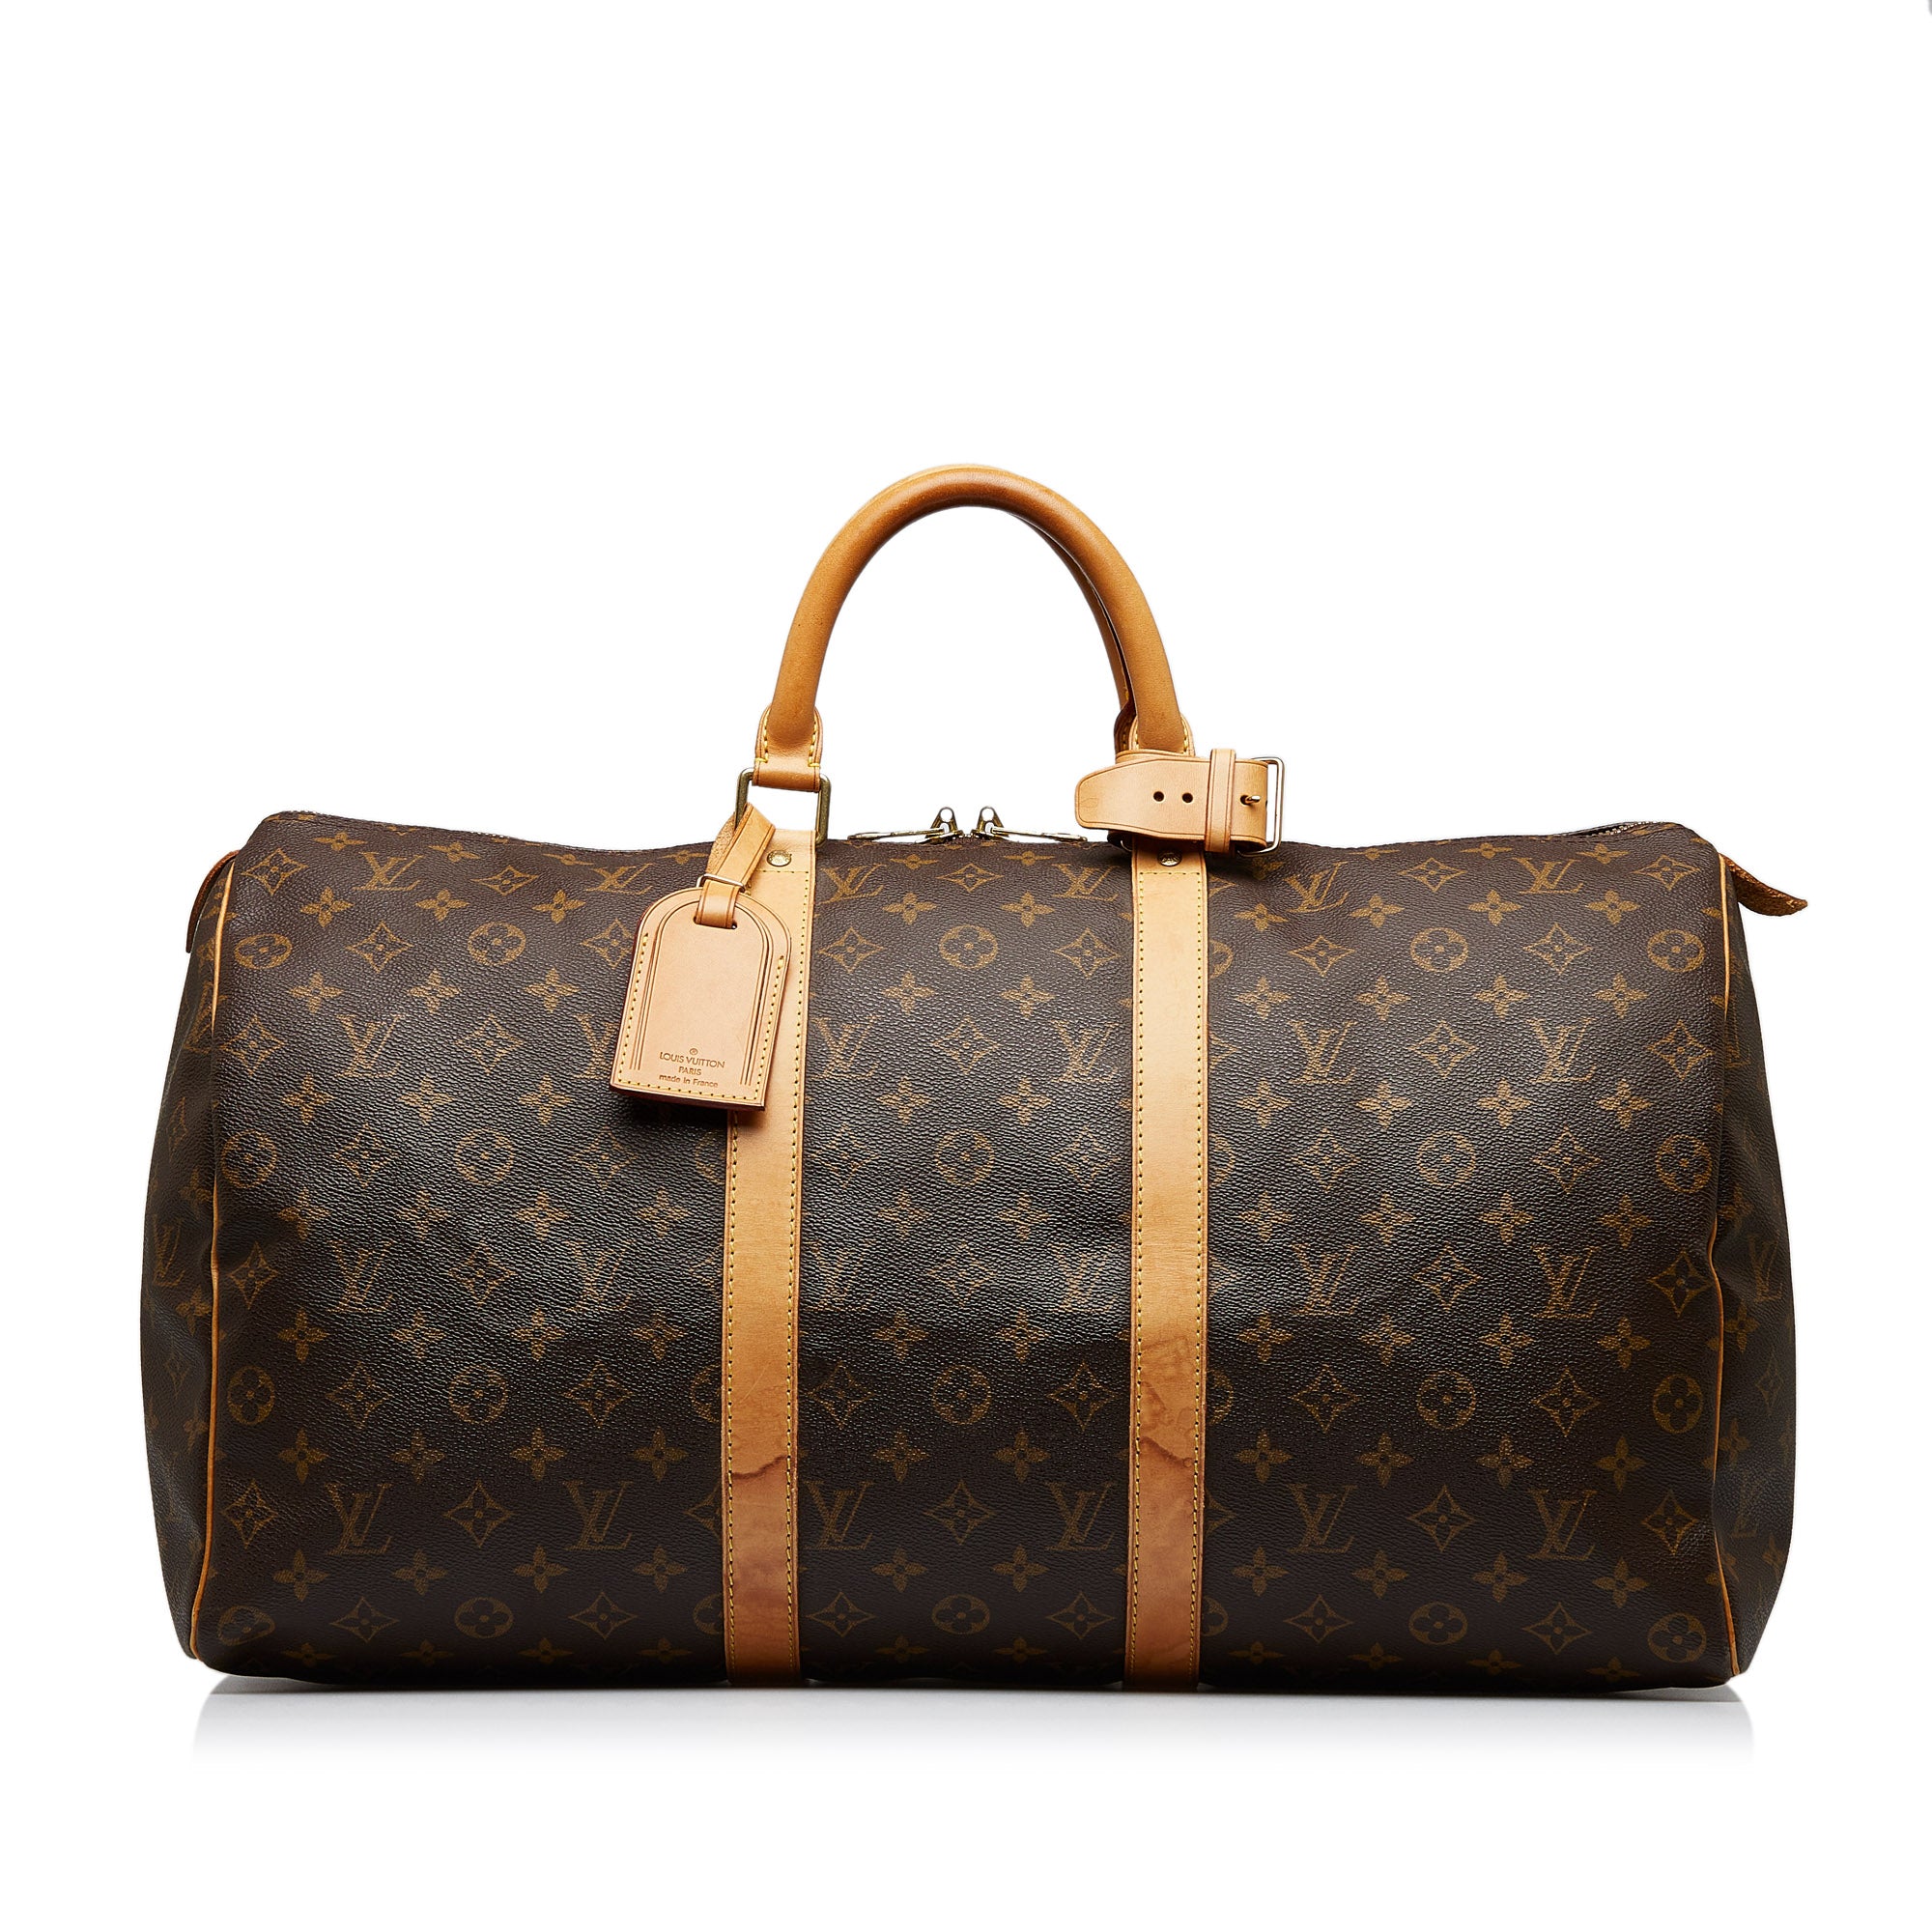 Louis Vuitton Keepall 50 - Good or Bag